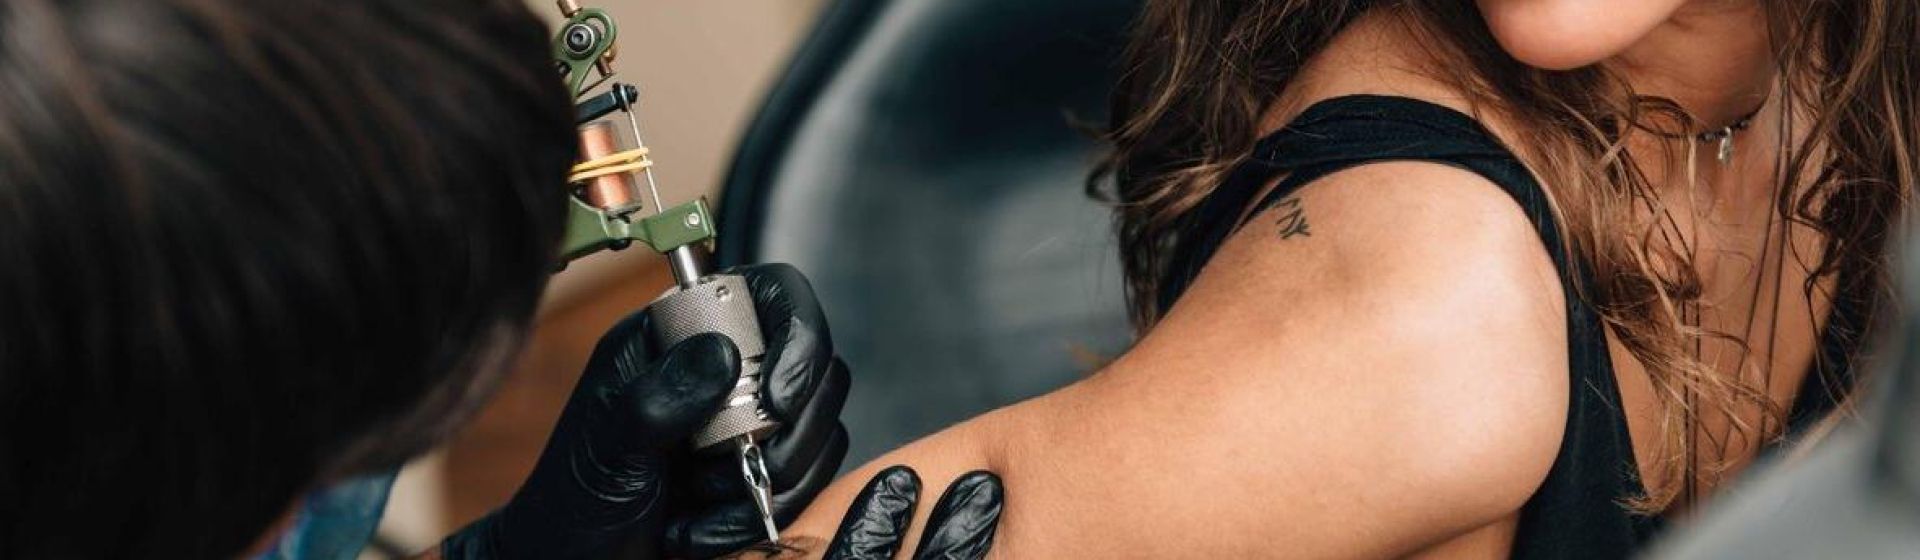 Как татуировка меняет человека - Лайфхакер